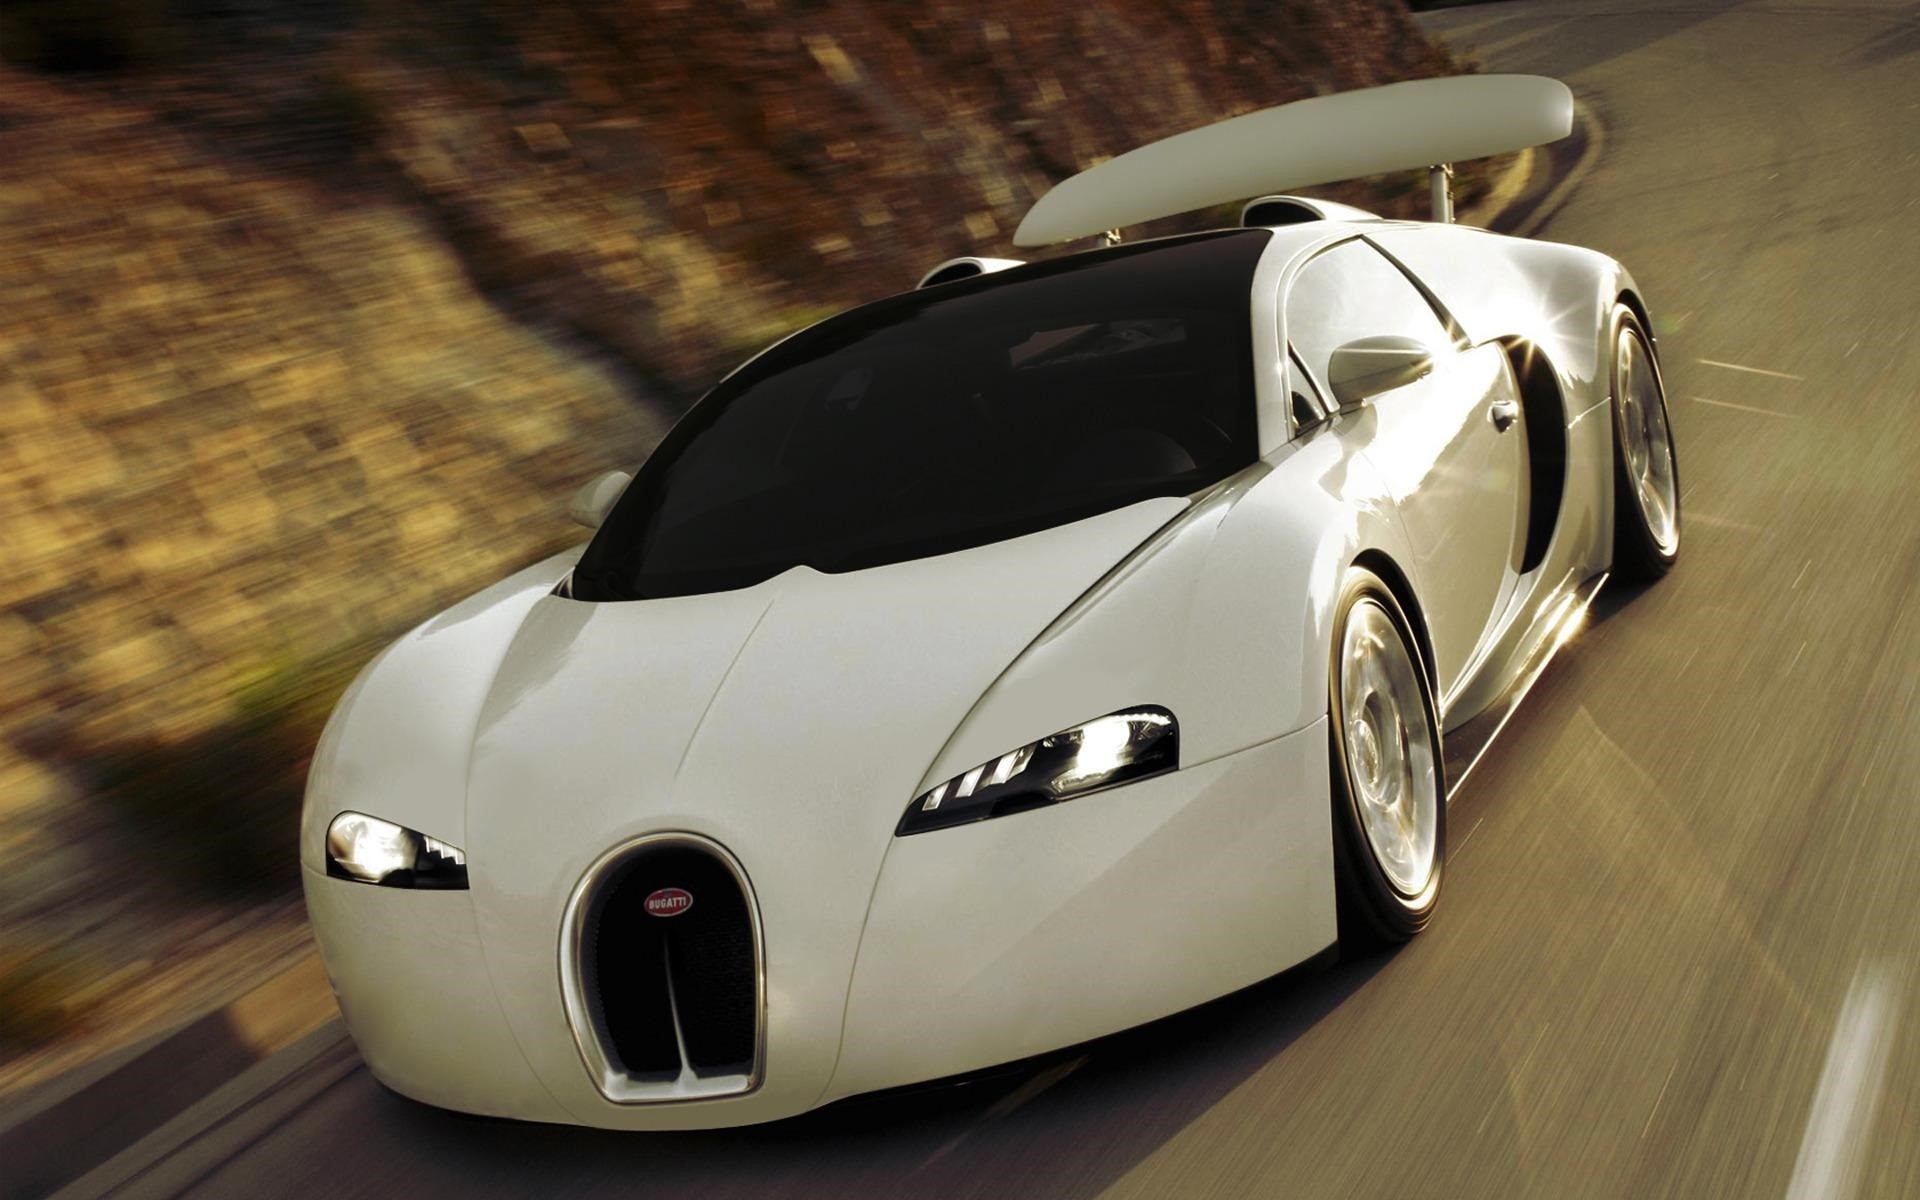 New White Bugatti Hd Nice Wallpaper - 5 Million Dollar Bugatti - HD Wallpaper 